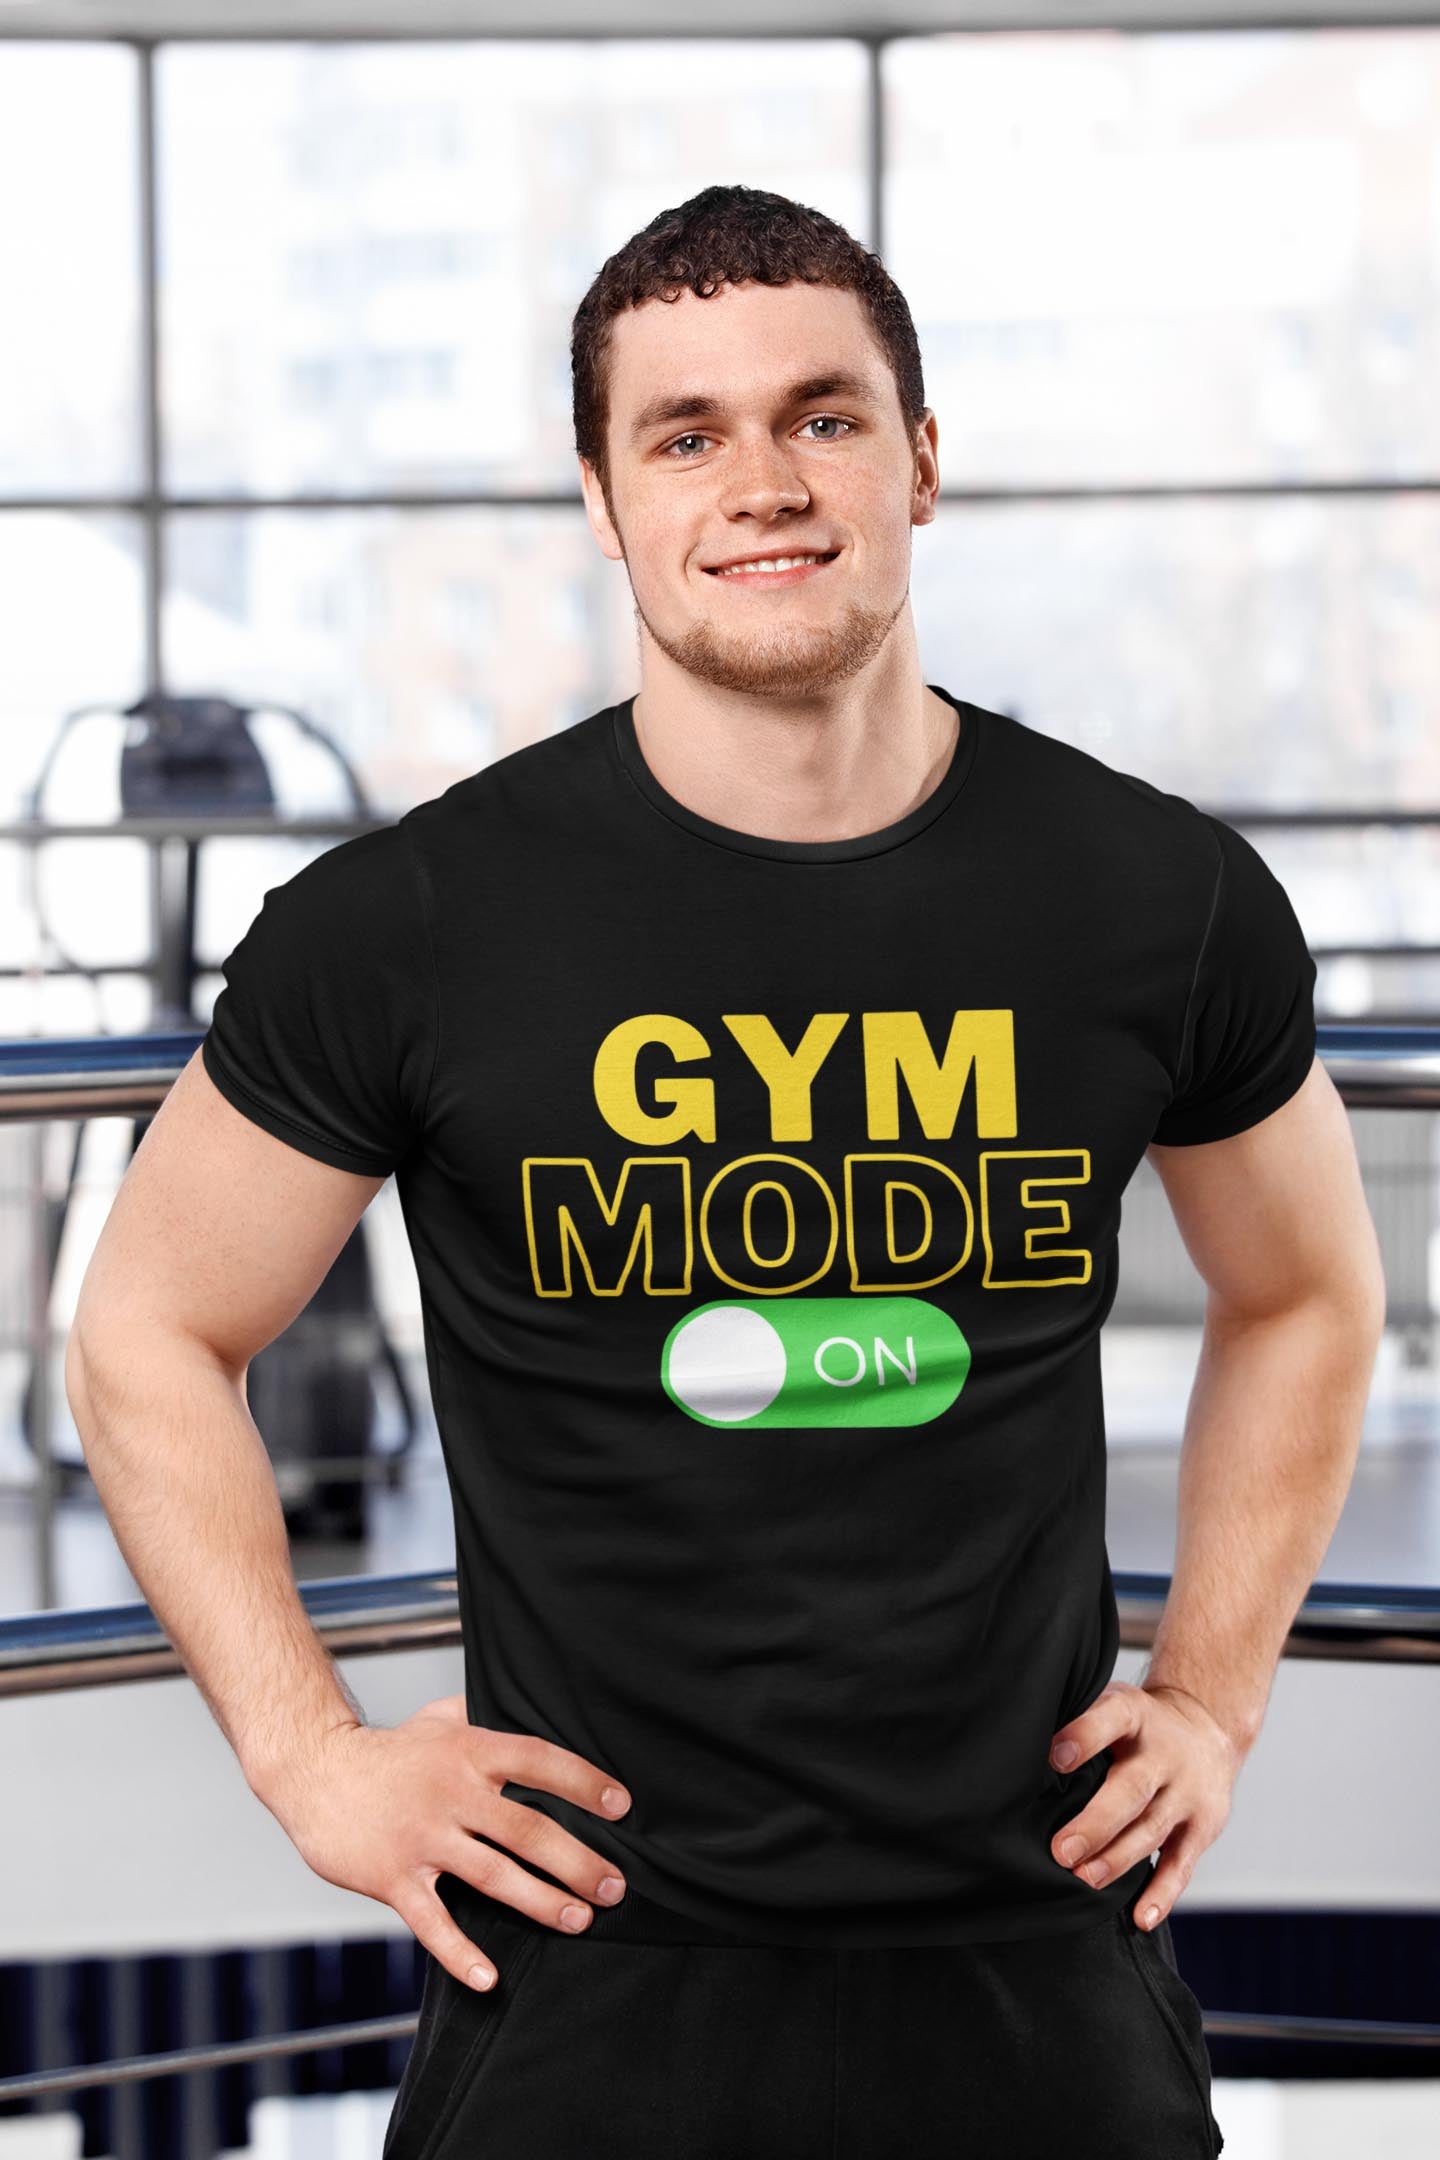 Gym Mode On Men's Cotton T-Shirt